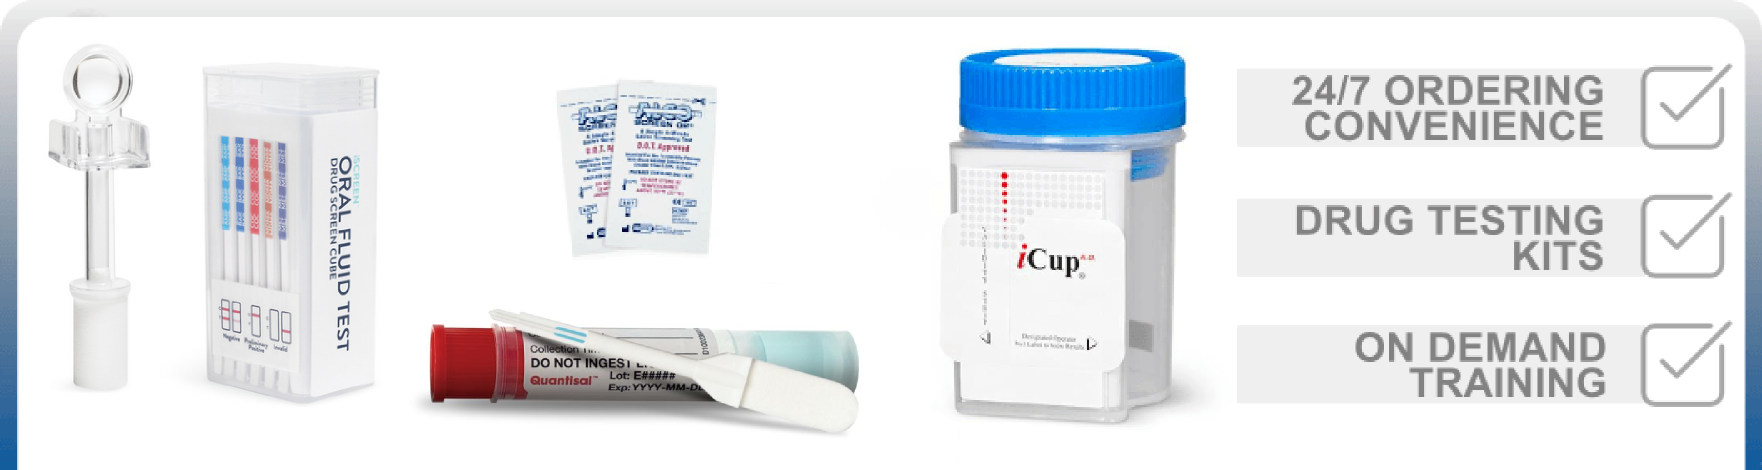 Drug-Free-Workplace-Store-Drug-Testing-Kits